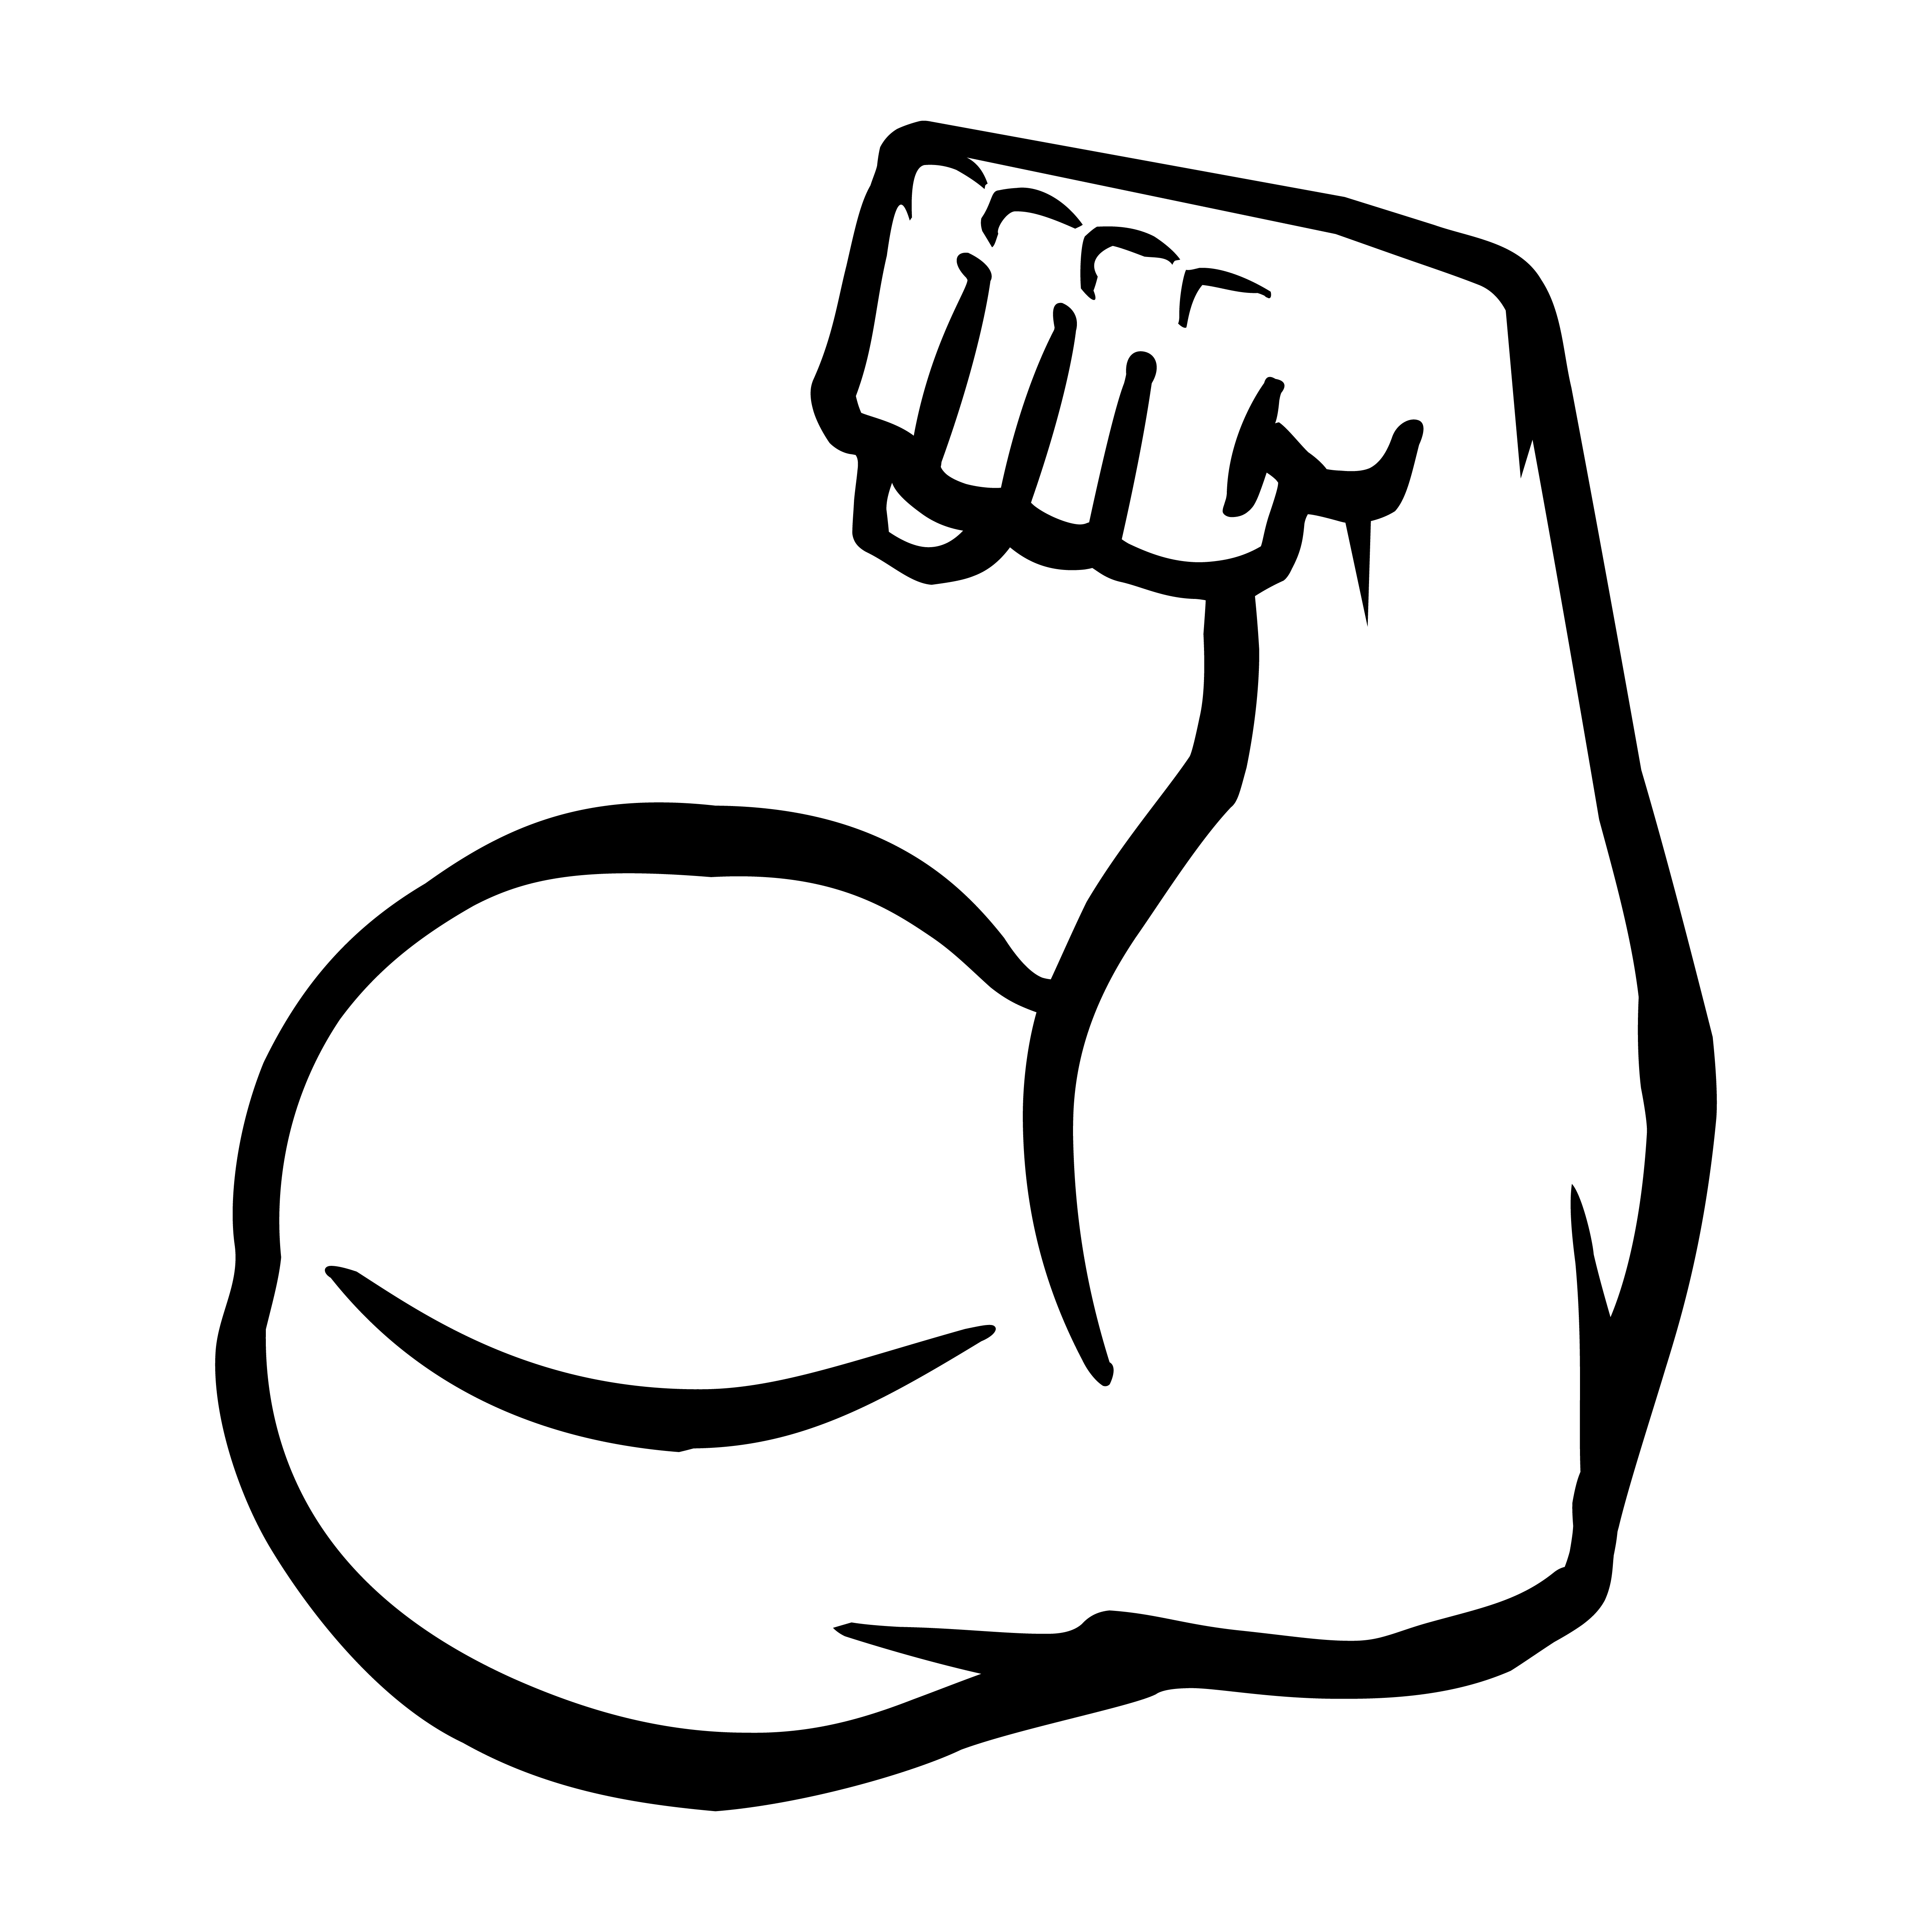 Download the Strong Bodybuilder Biceps Flex Arm Vector Icon 551200